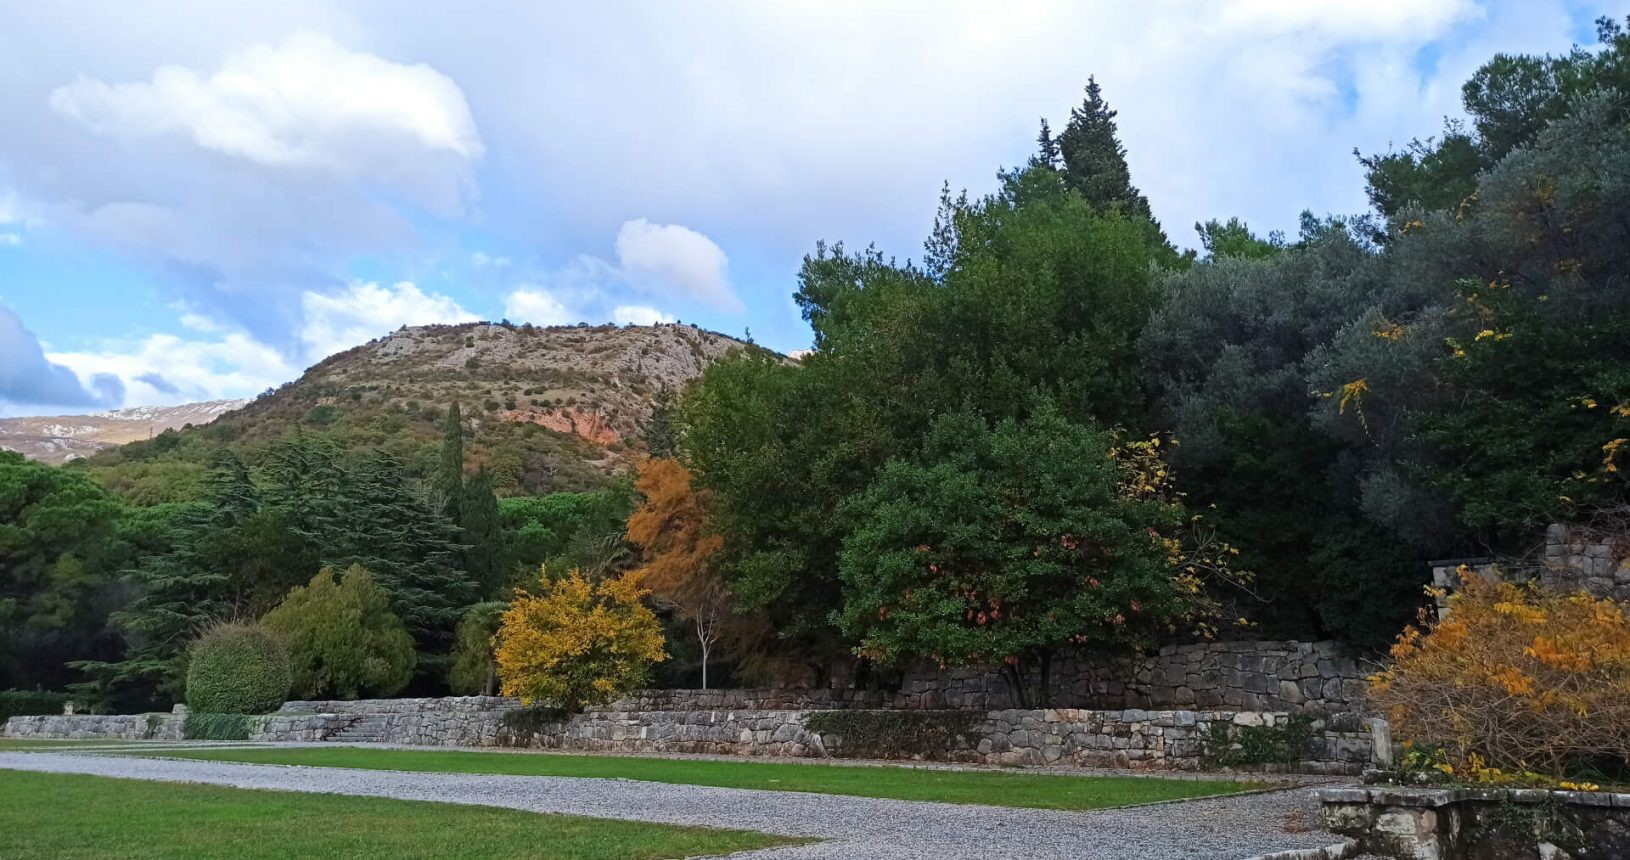 Autumn colours in the garden. Park Milocer